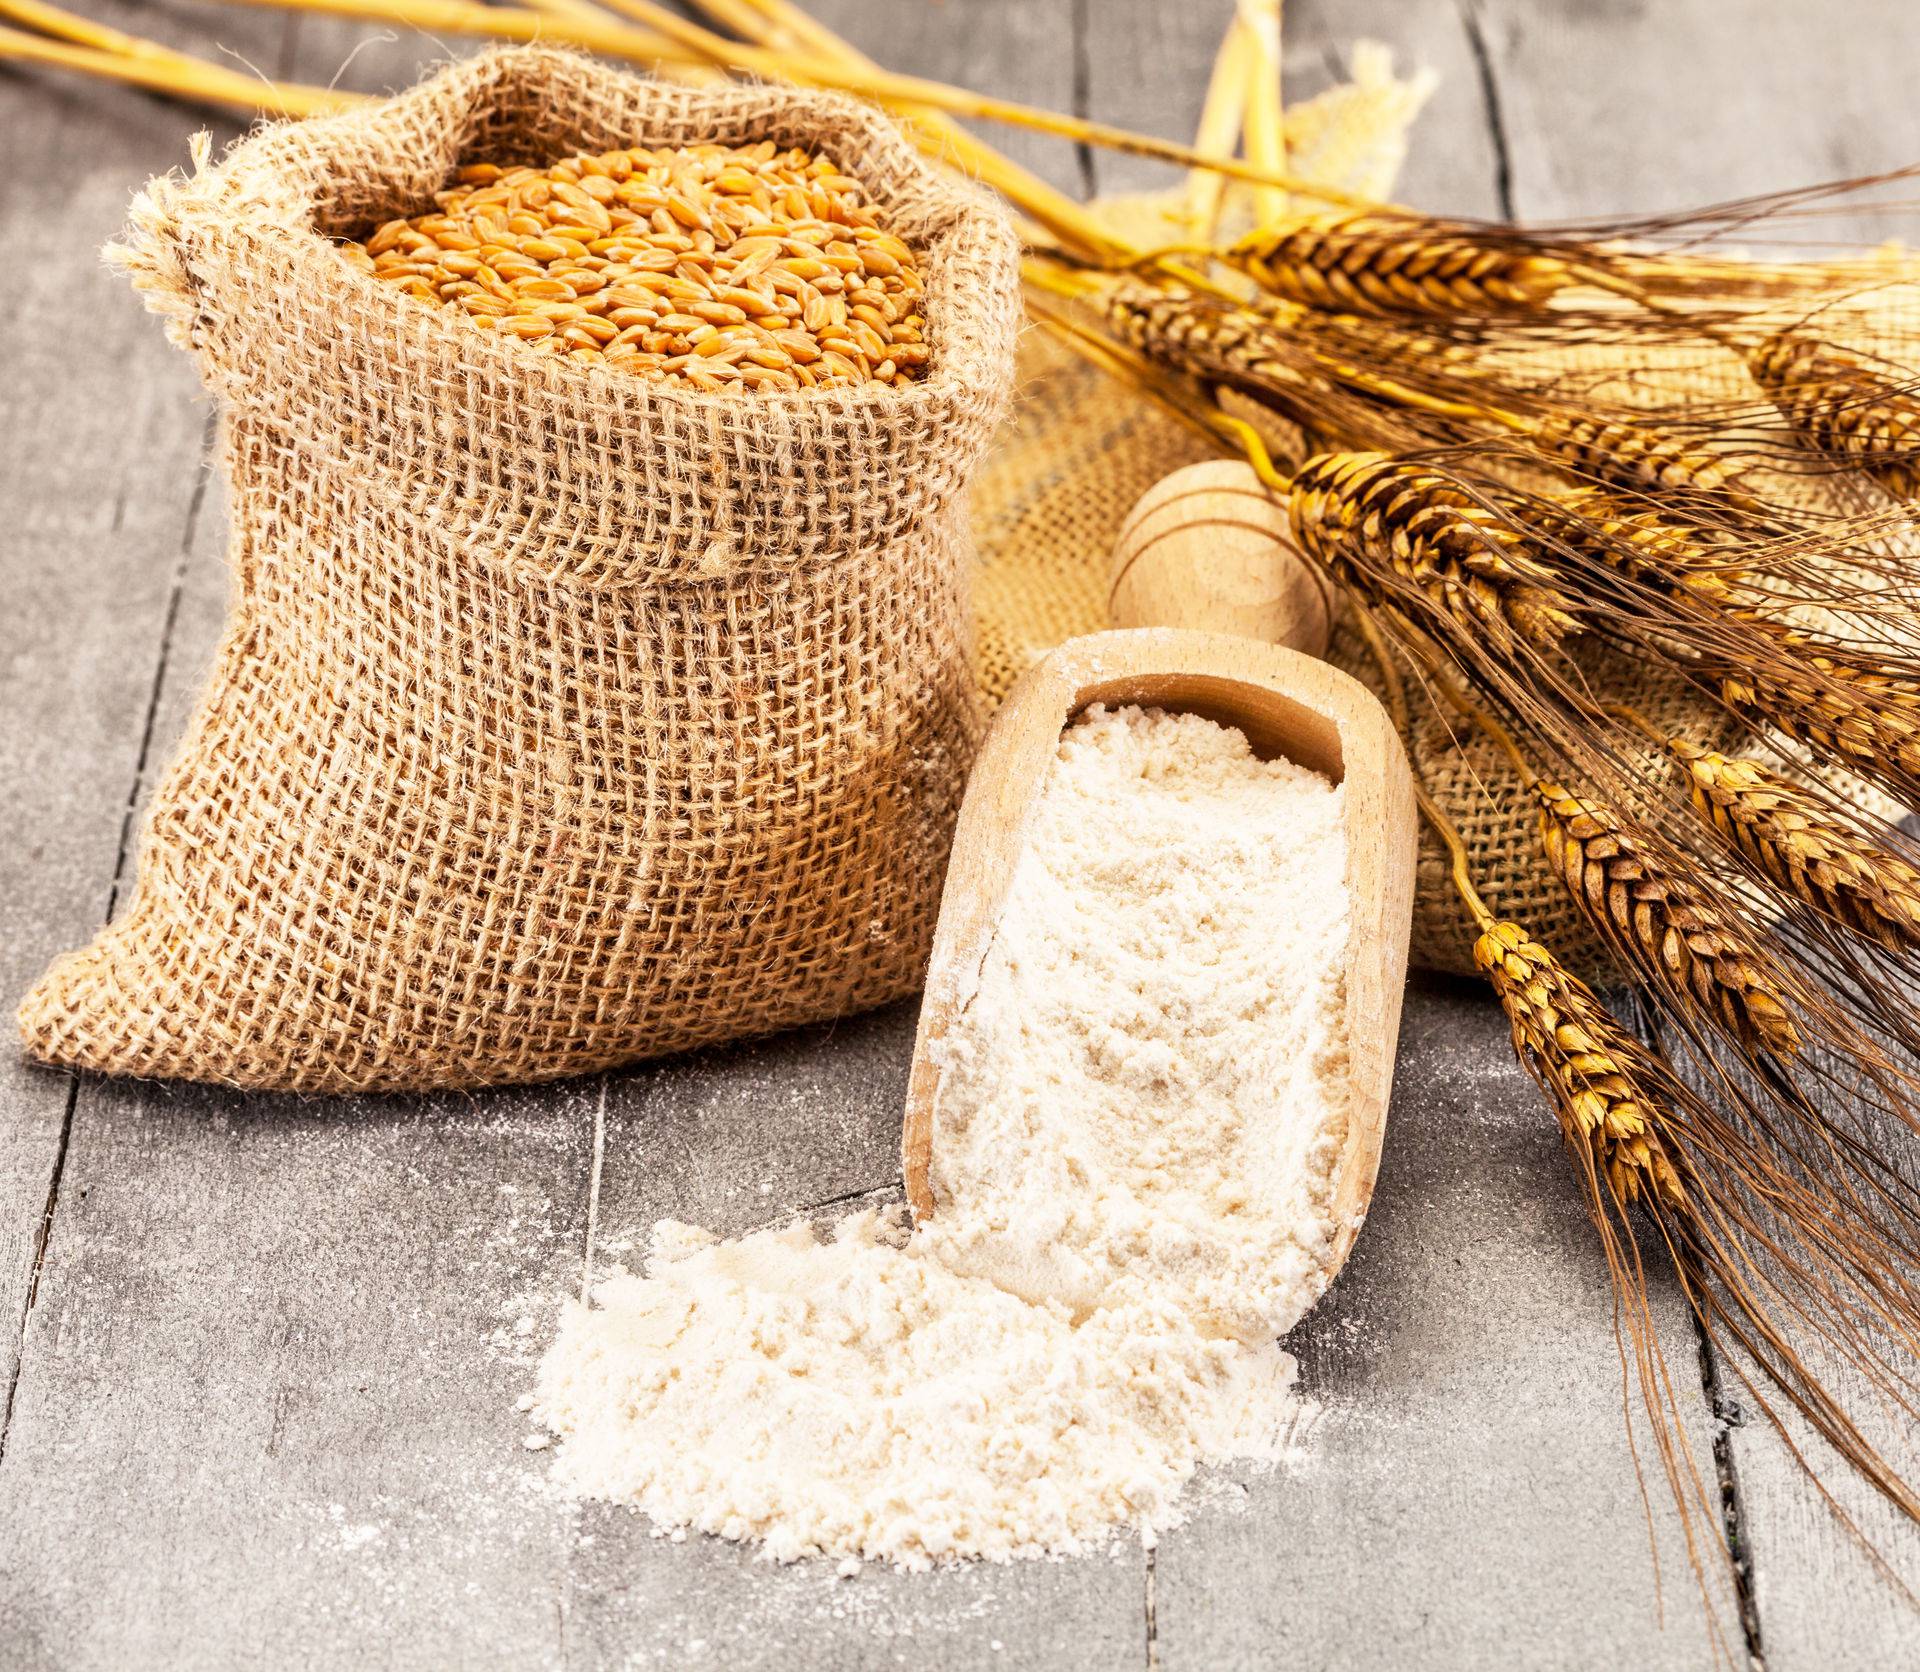 Wheat grains and flour